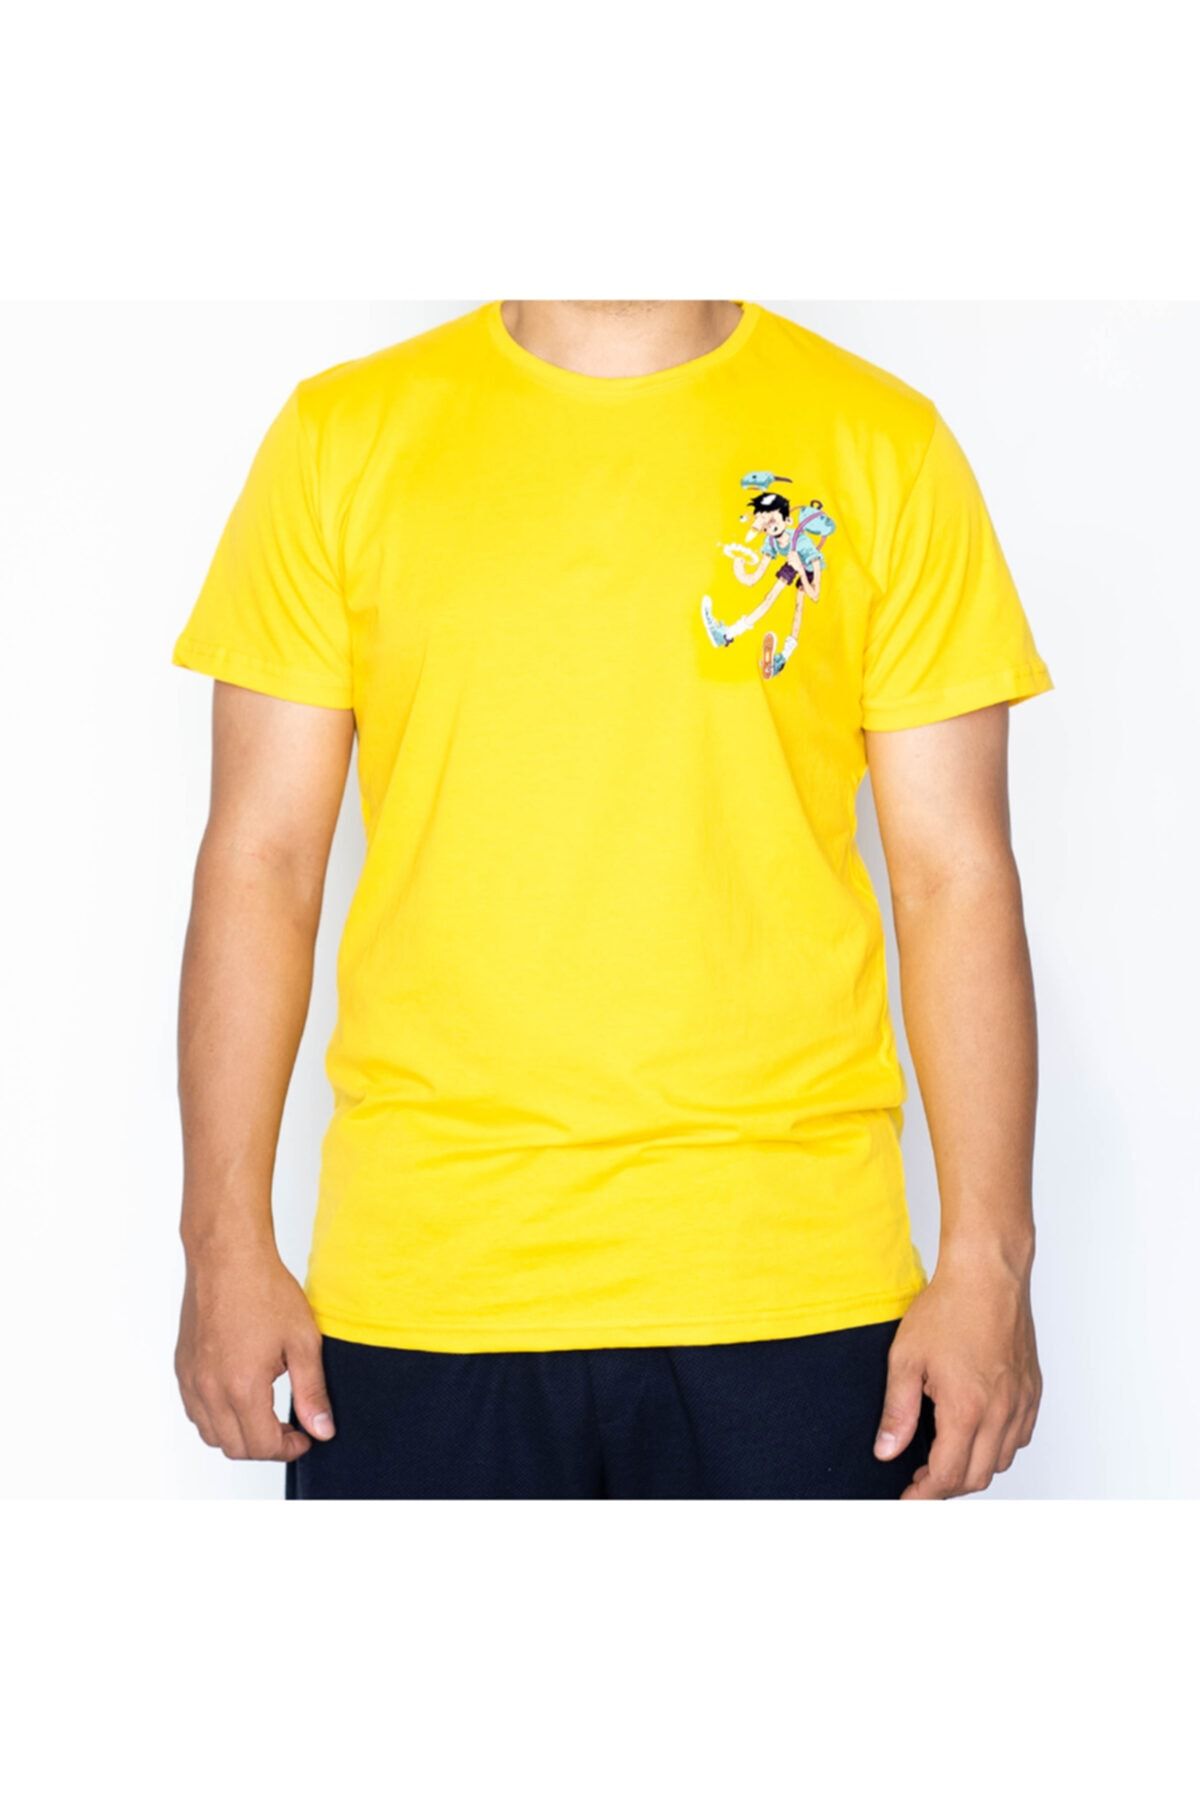 MOGA Rocketman Tişört, Unisex Sarı T-shirt